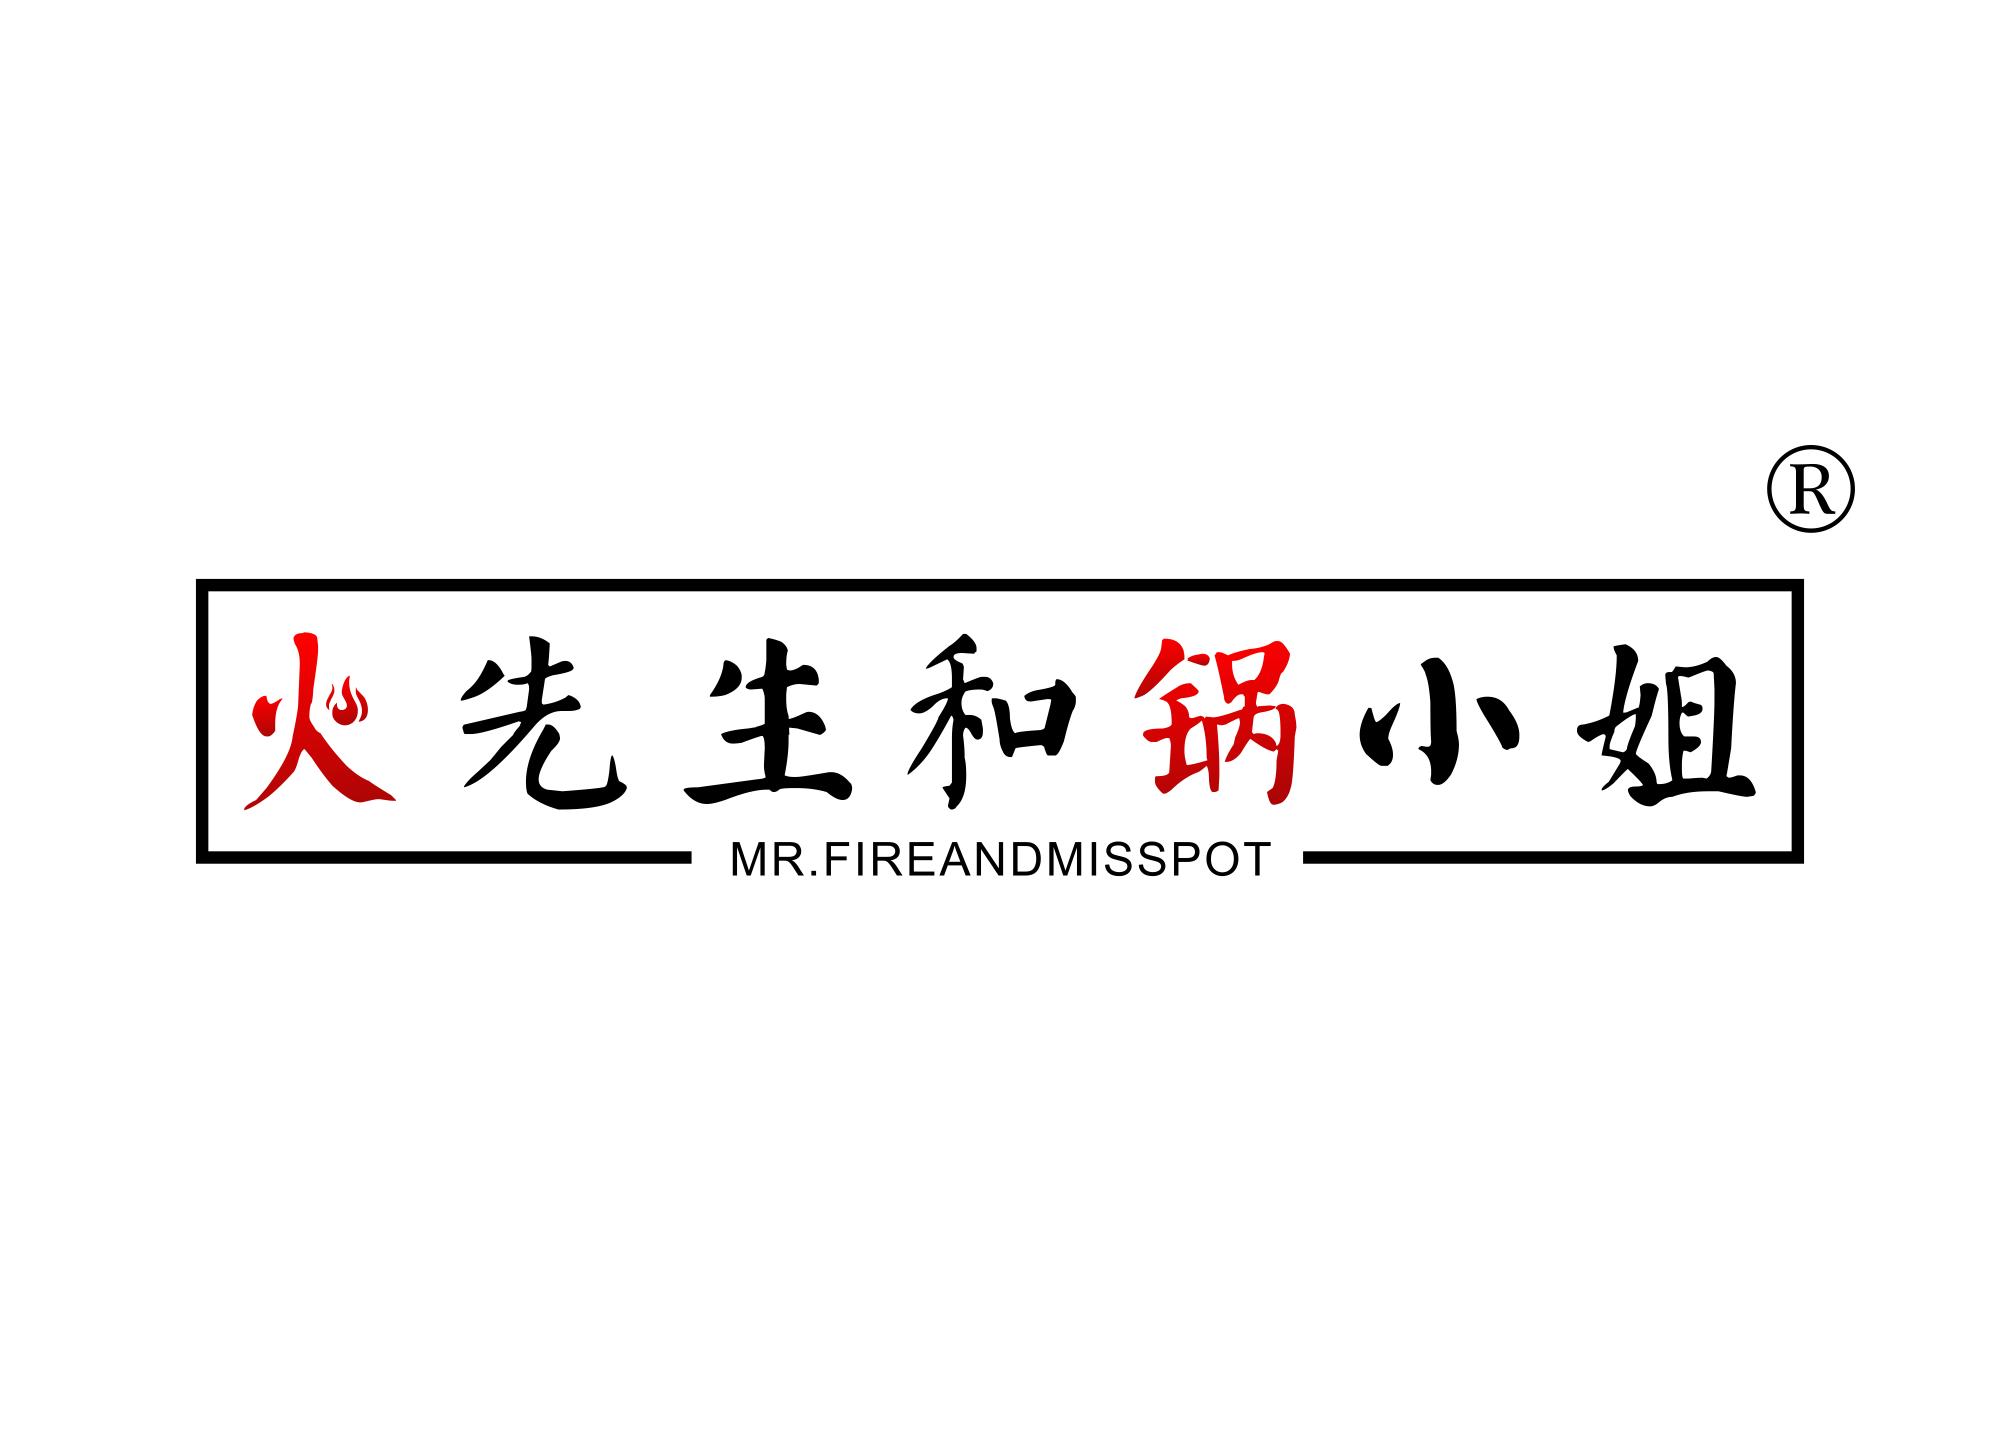 L-12928 火先生和锅小姐 MR. FIREANDMISSPOT